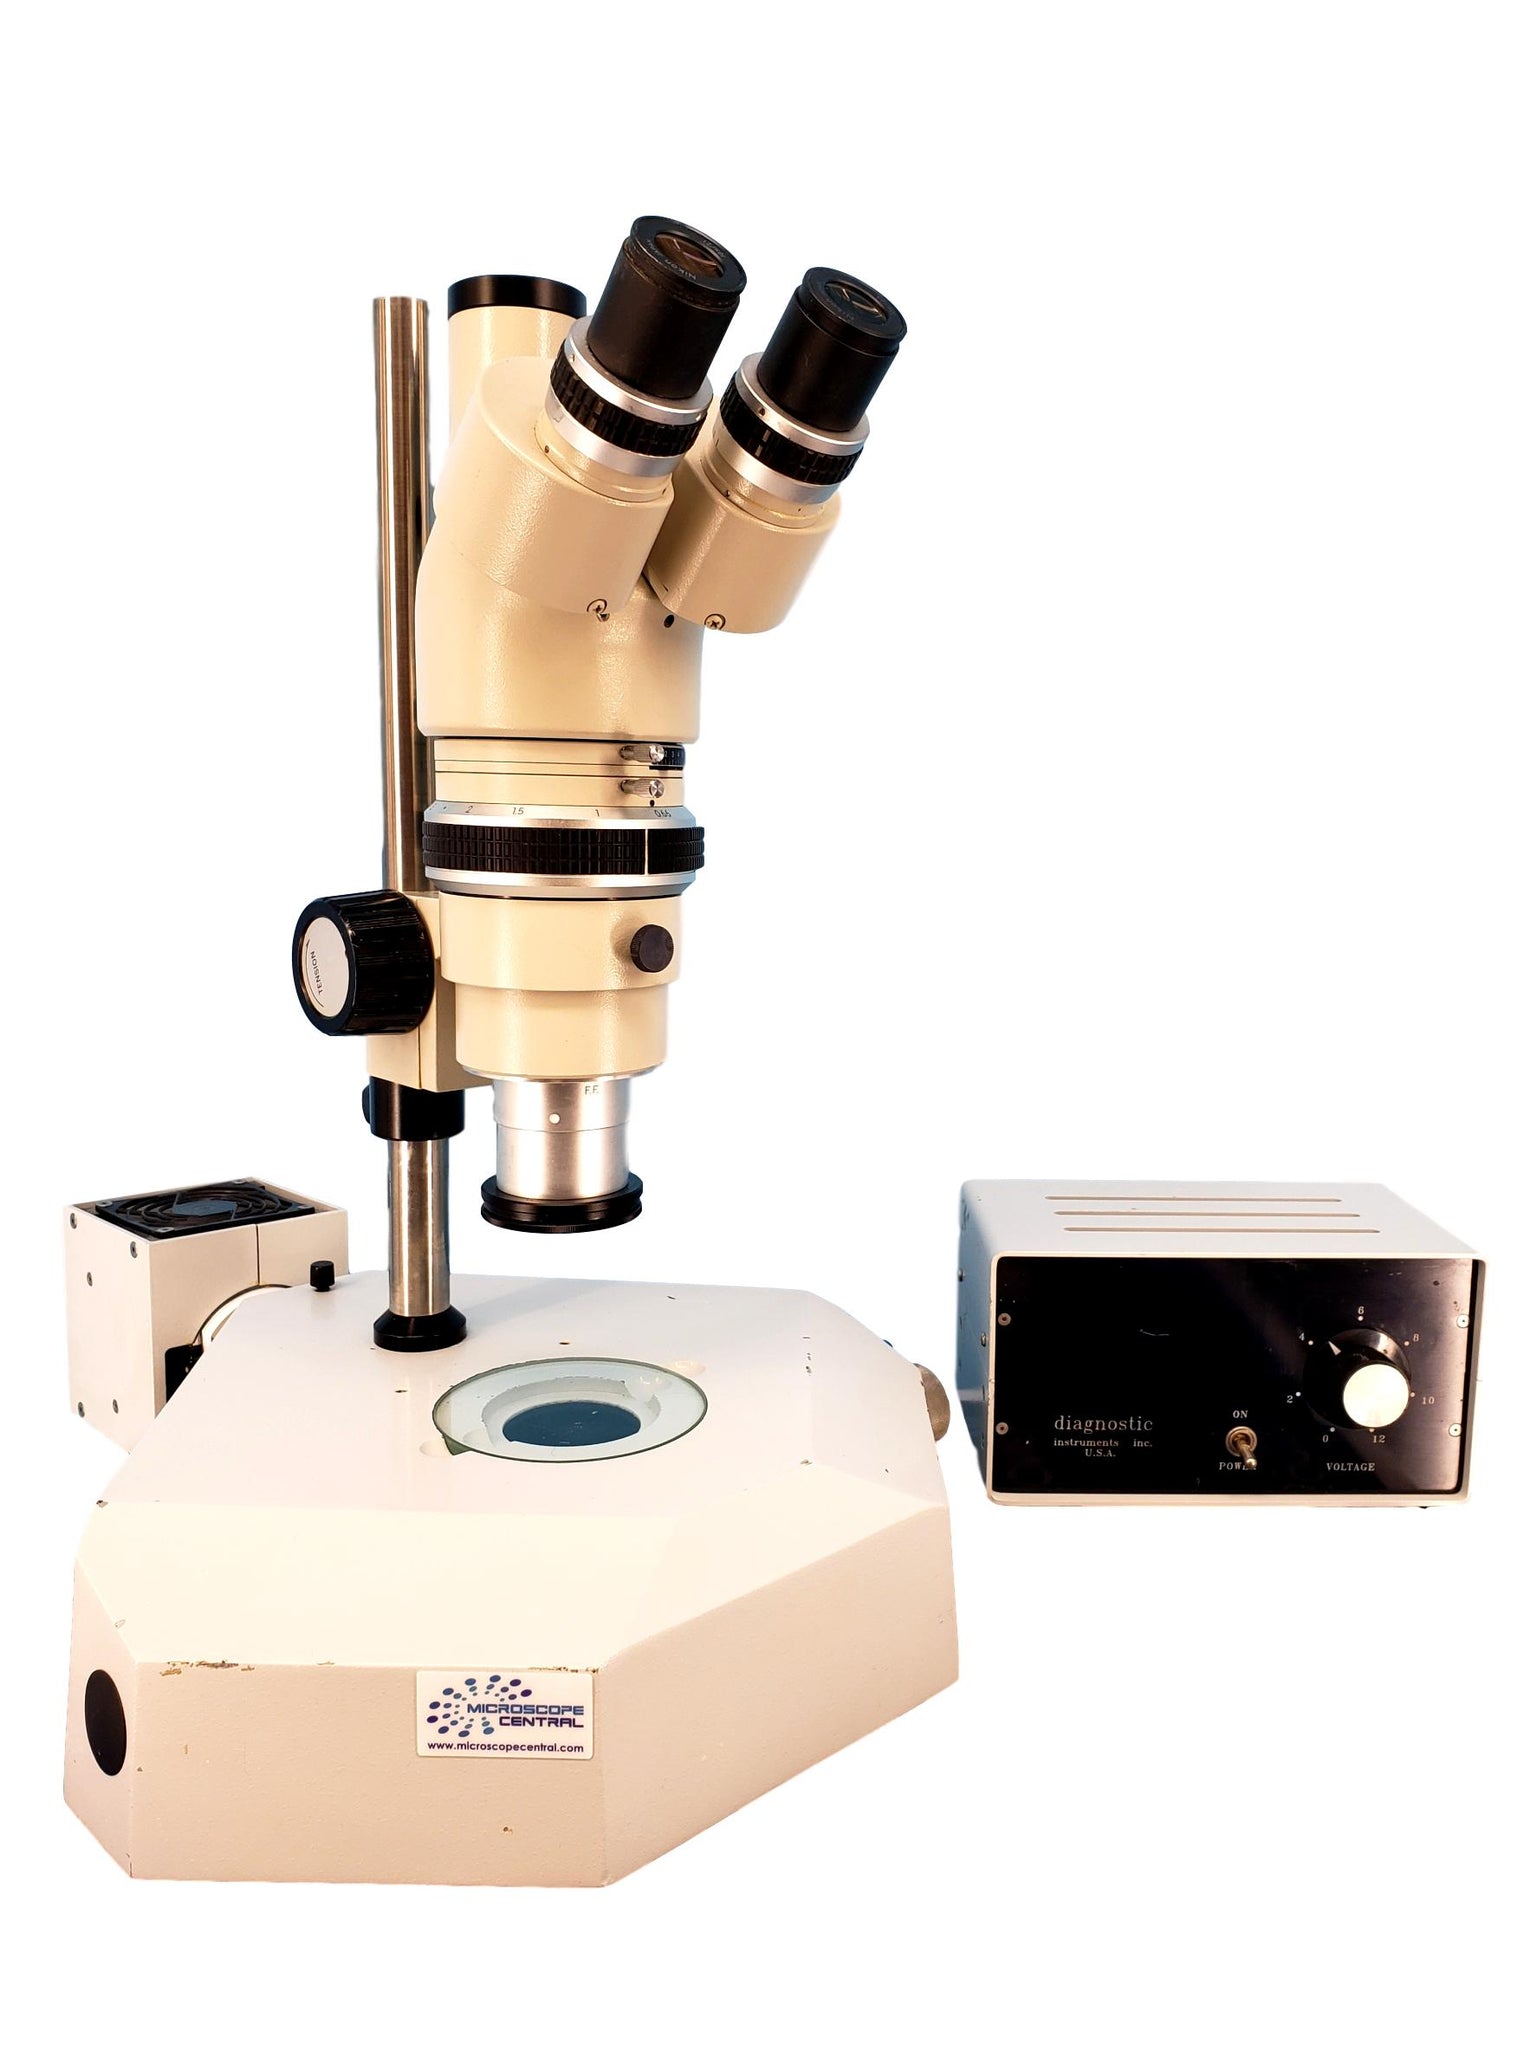 Nikon SMZ-10 Trinocular Microscope on Diascopic Stand